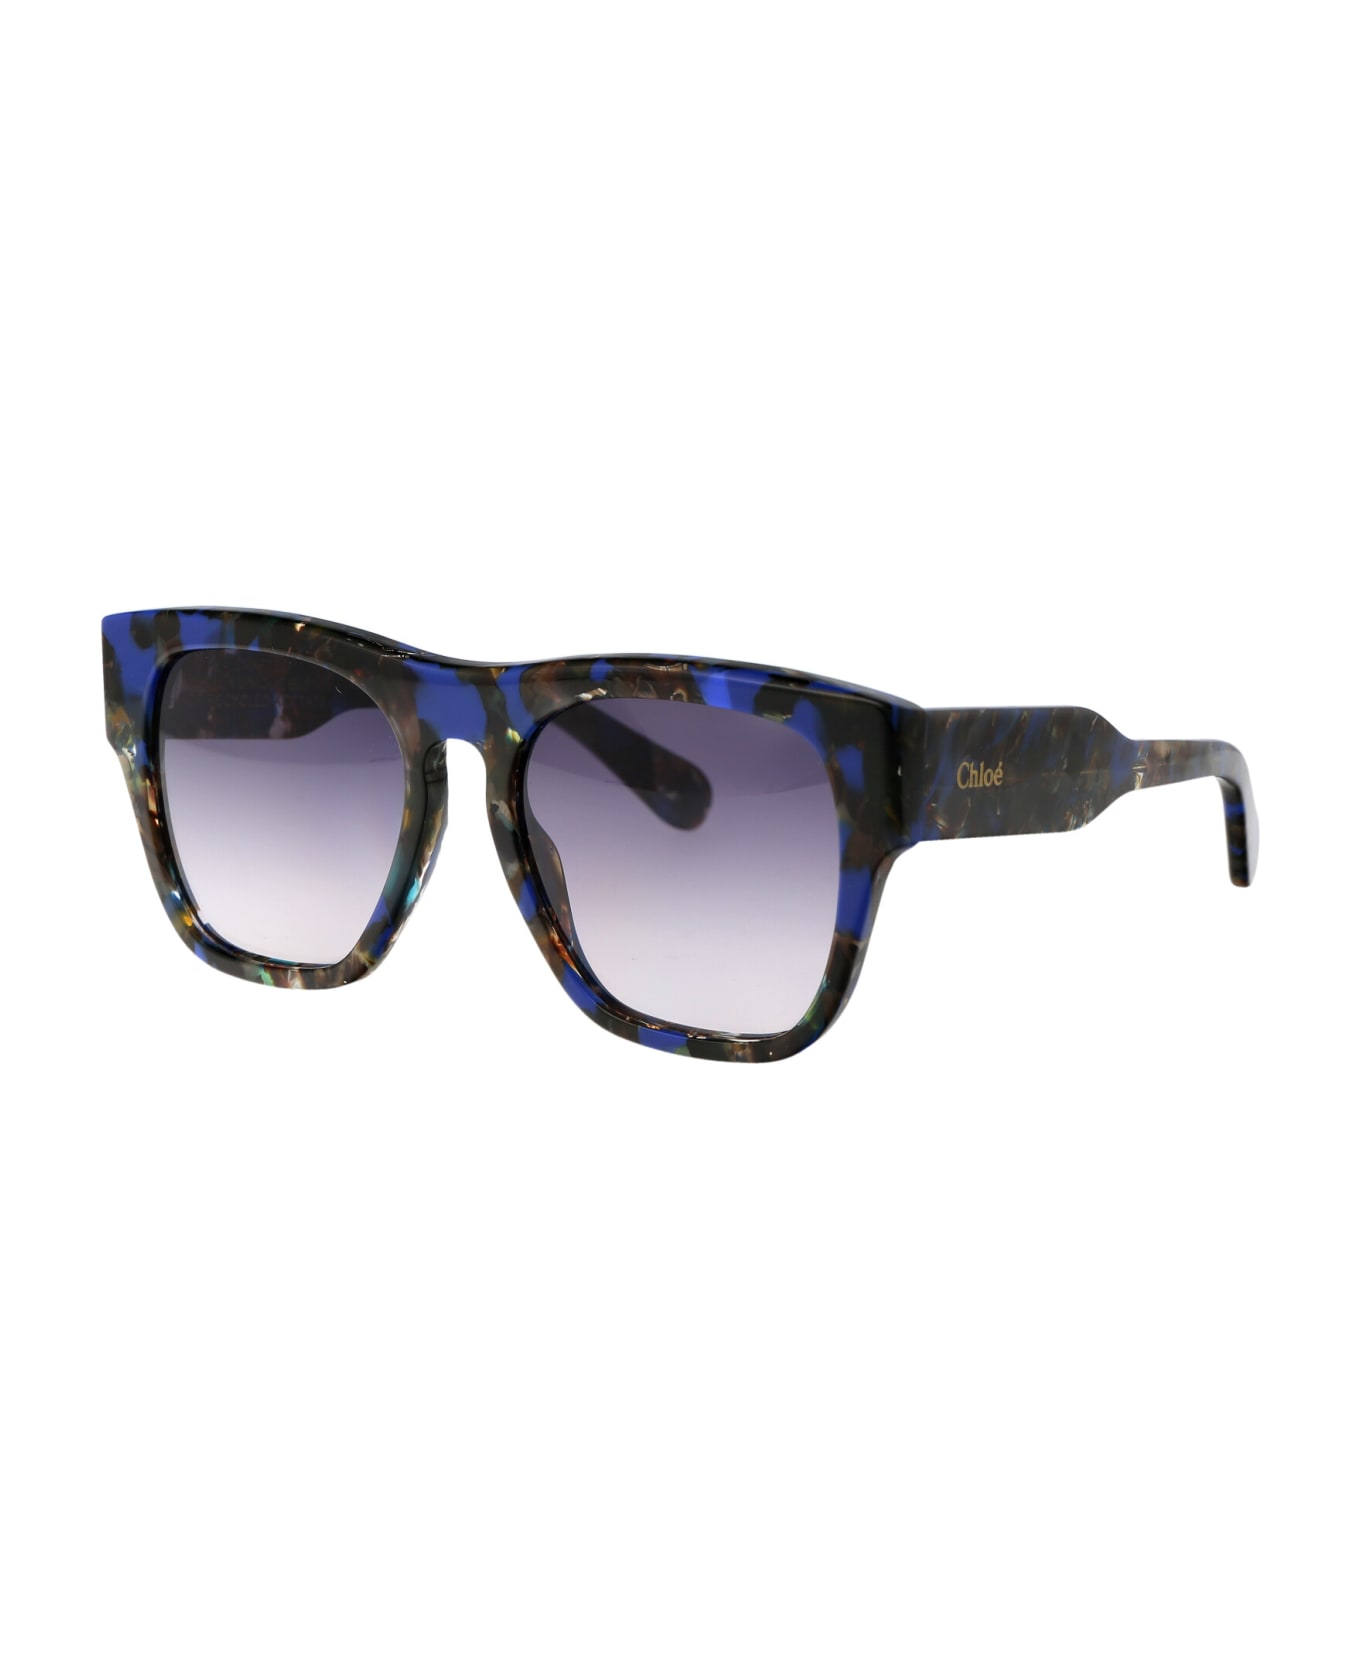 Chloé Eyewear Ch0149s Sunglasses - 008 BLUE BLUE BLUE